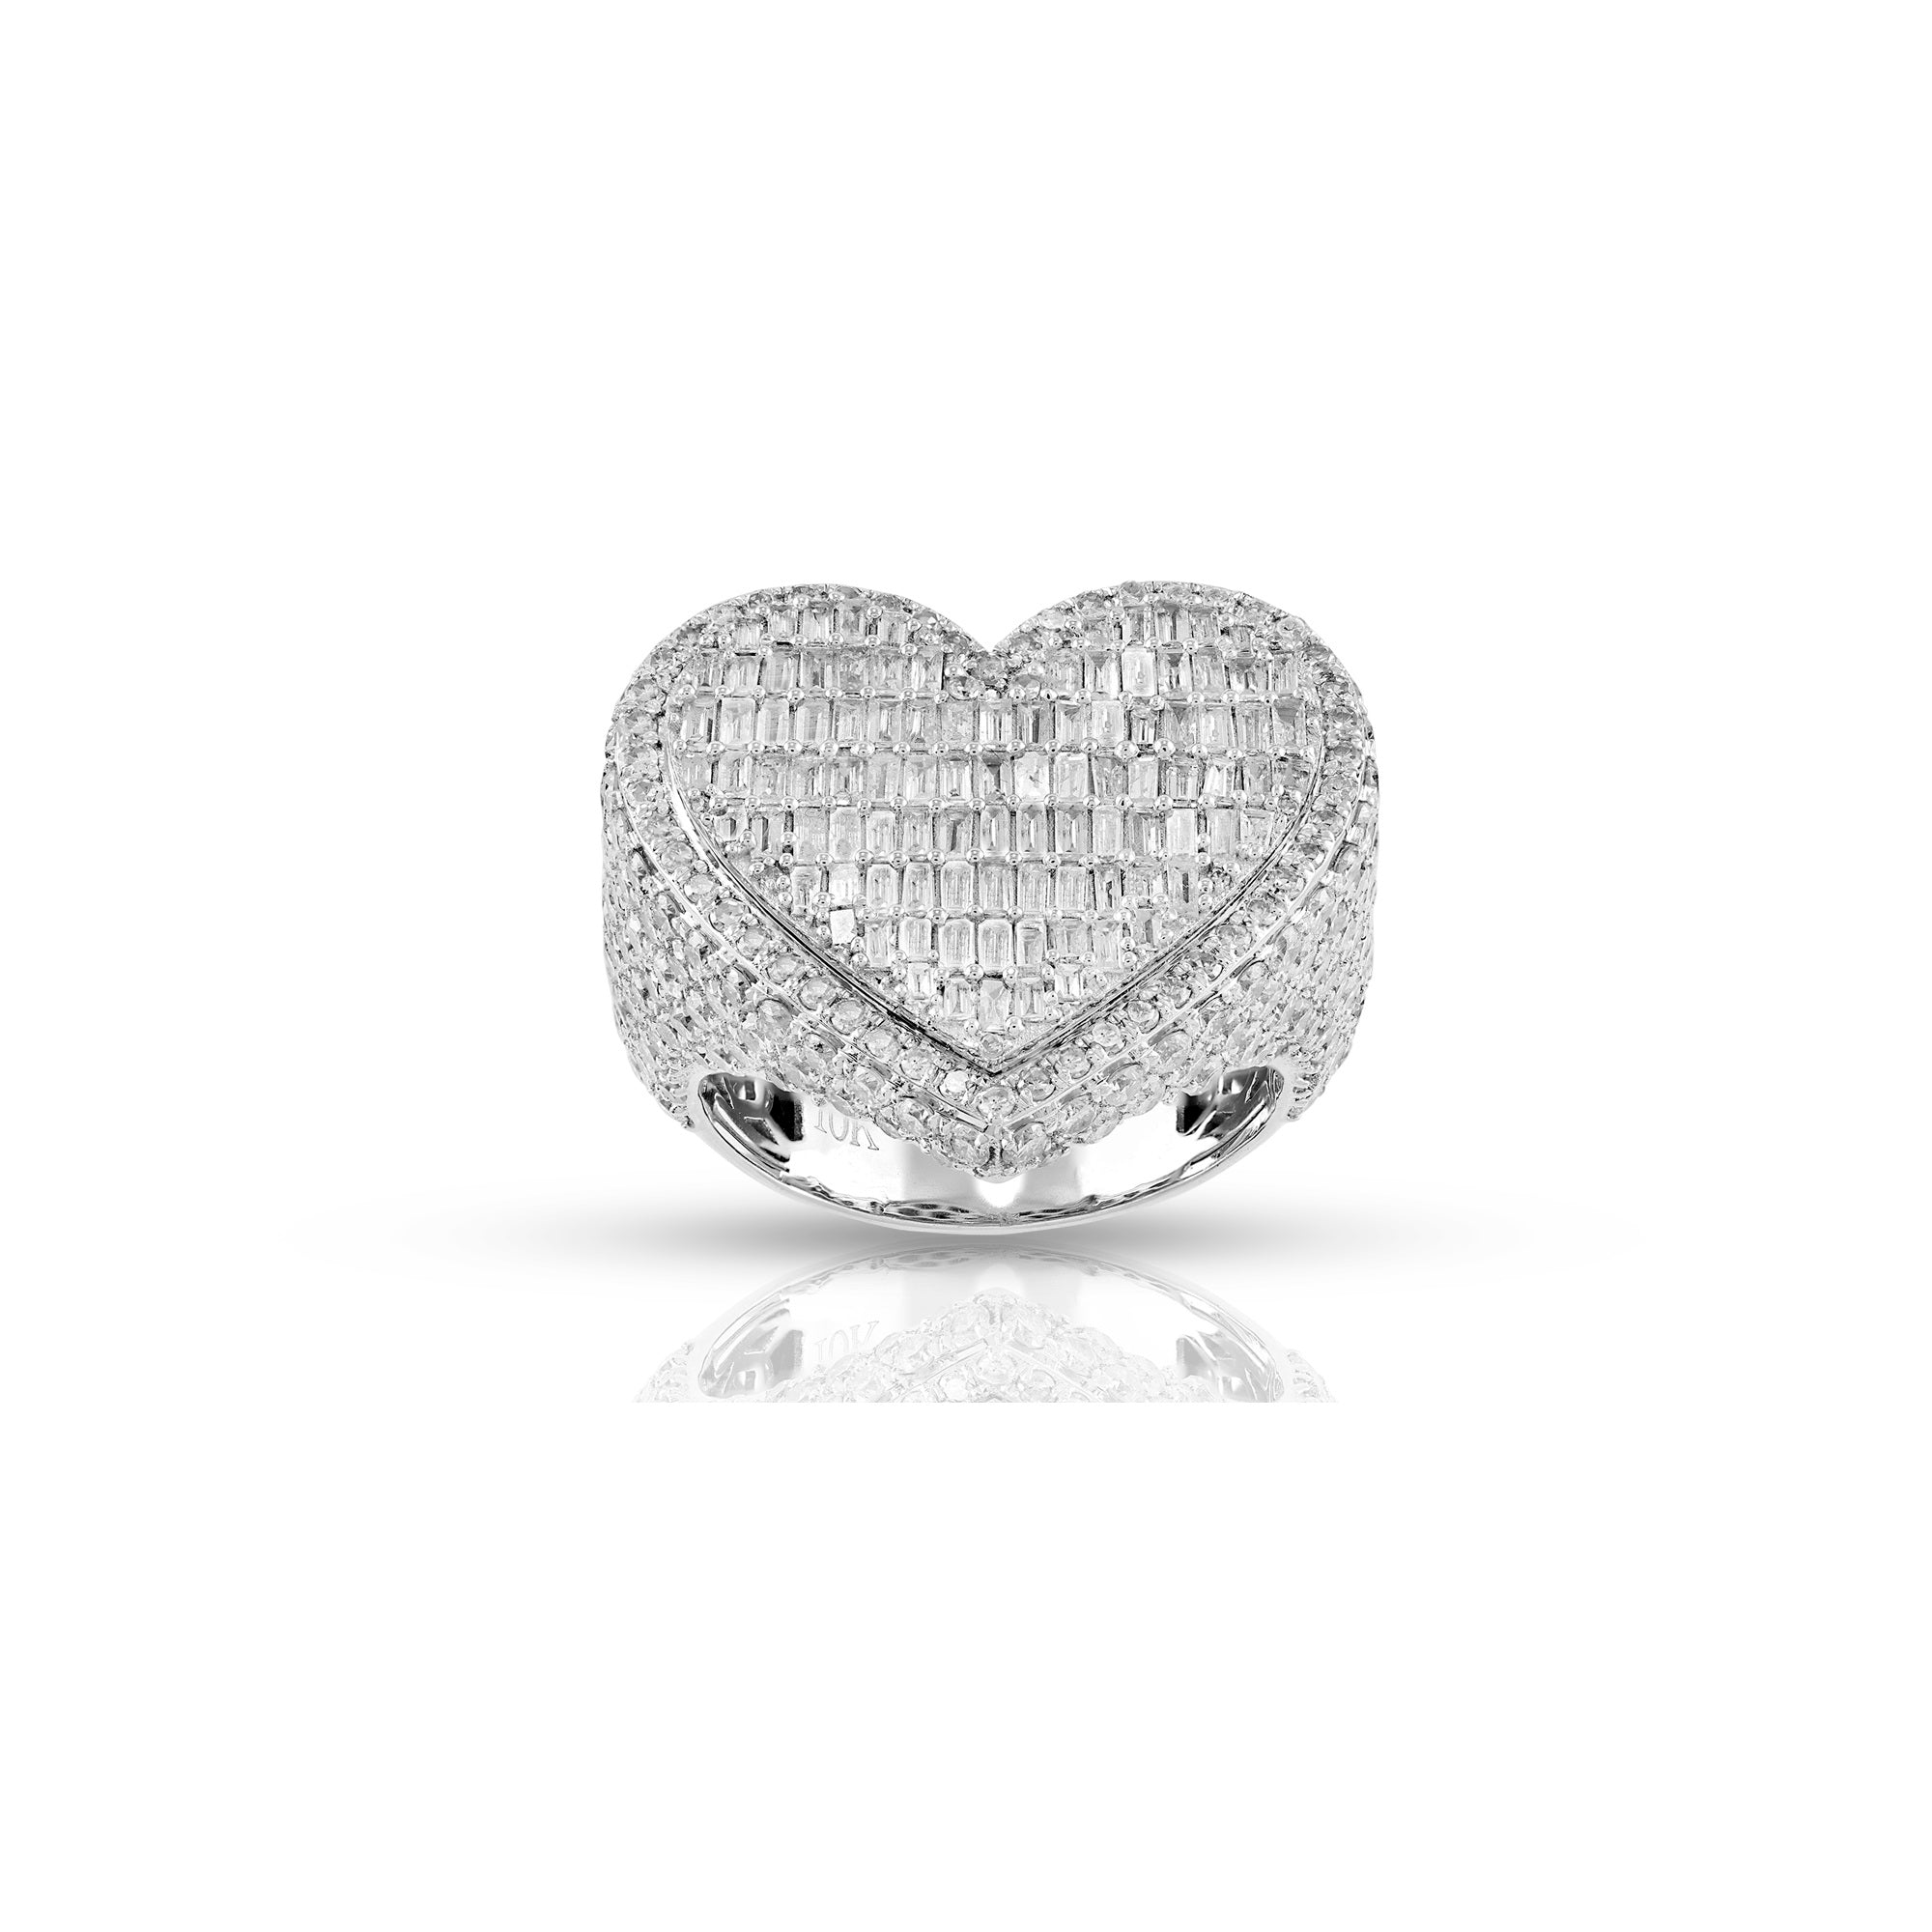 24mm White Gold Baguette Diamond Heart Ring by Rafaela Jewelry